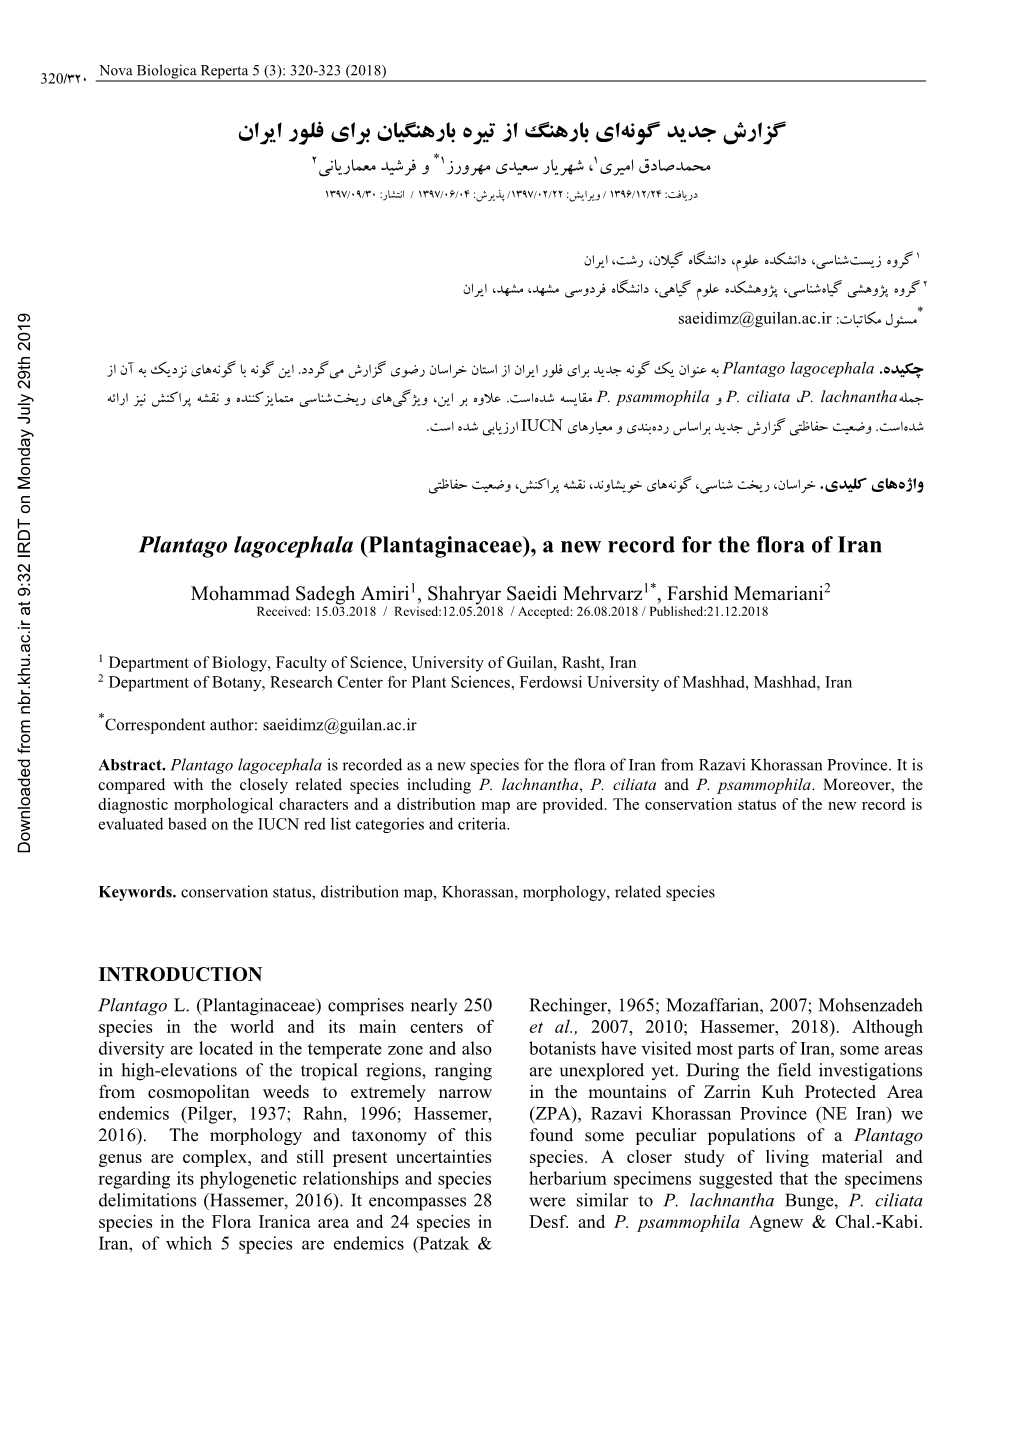 Plantago Lagocephala (Plantaginaceae), a New Record for the Flora of Iran